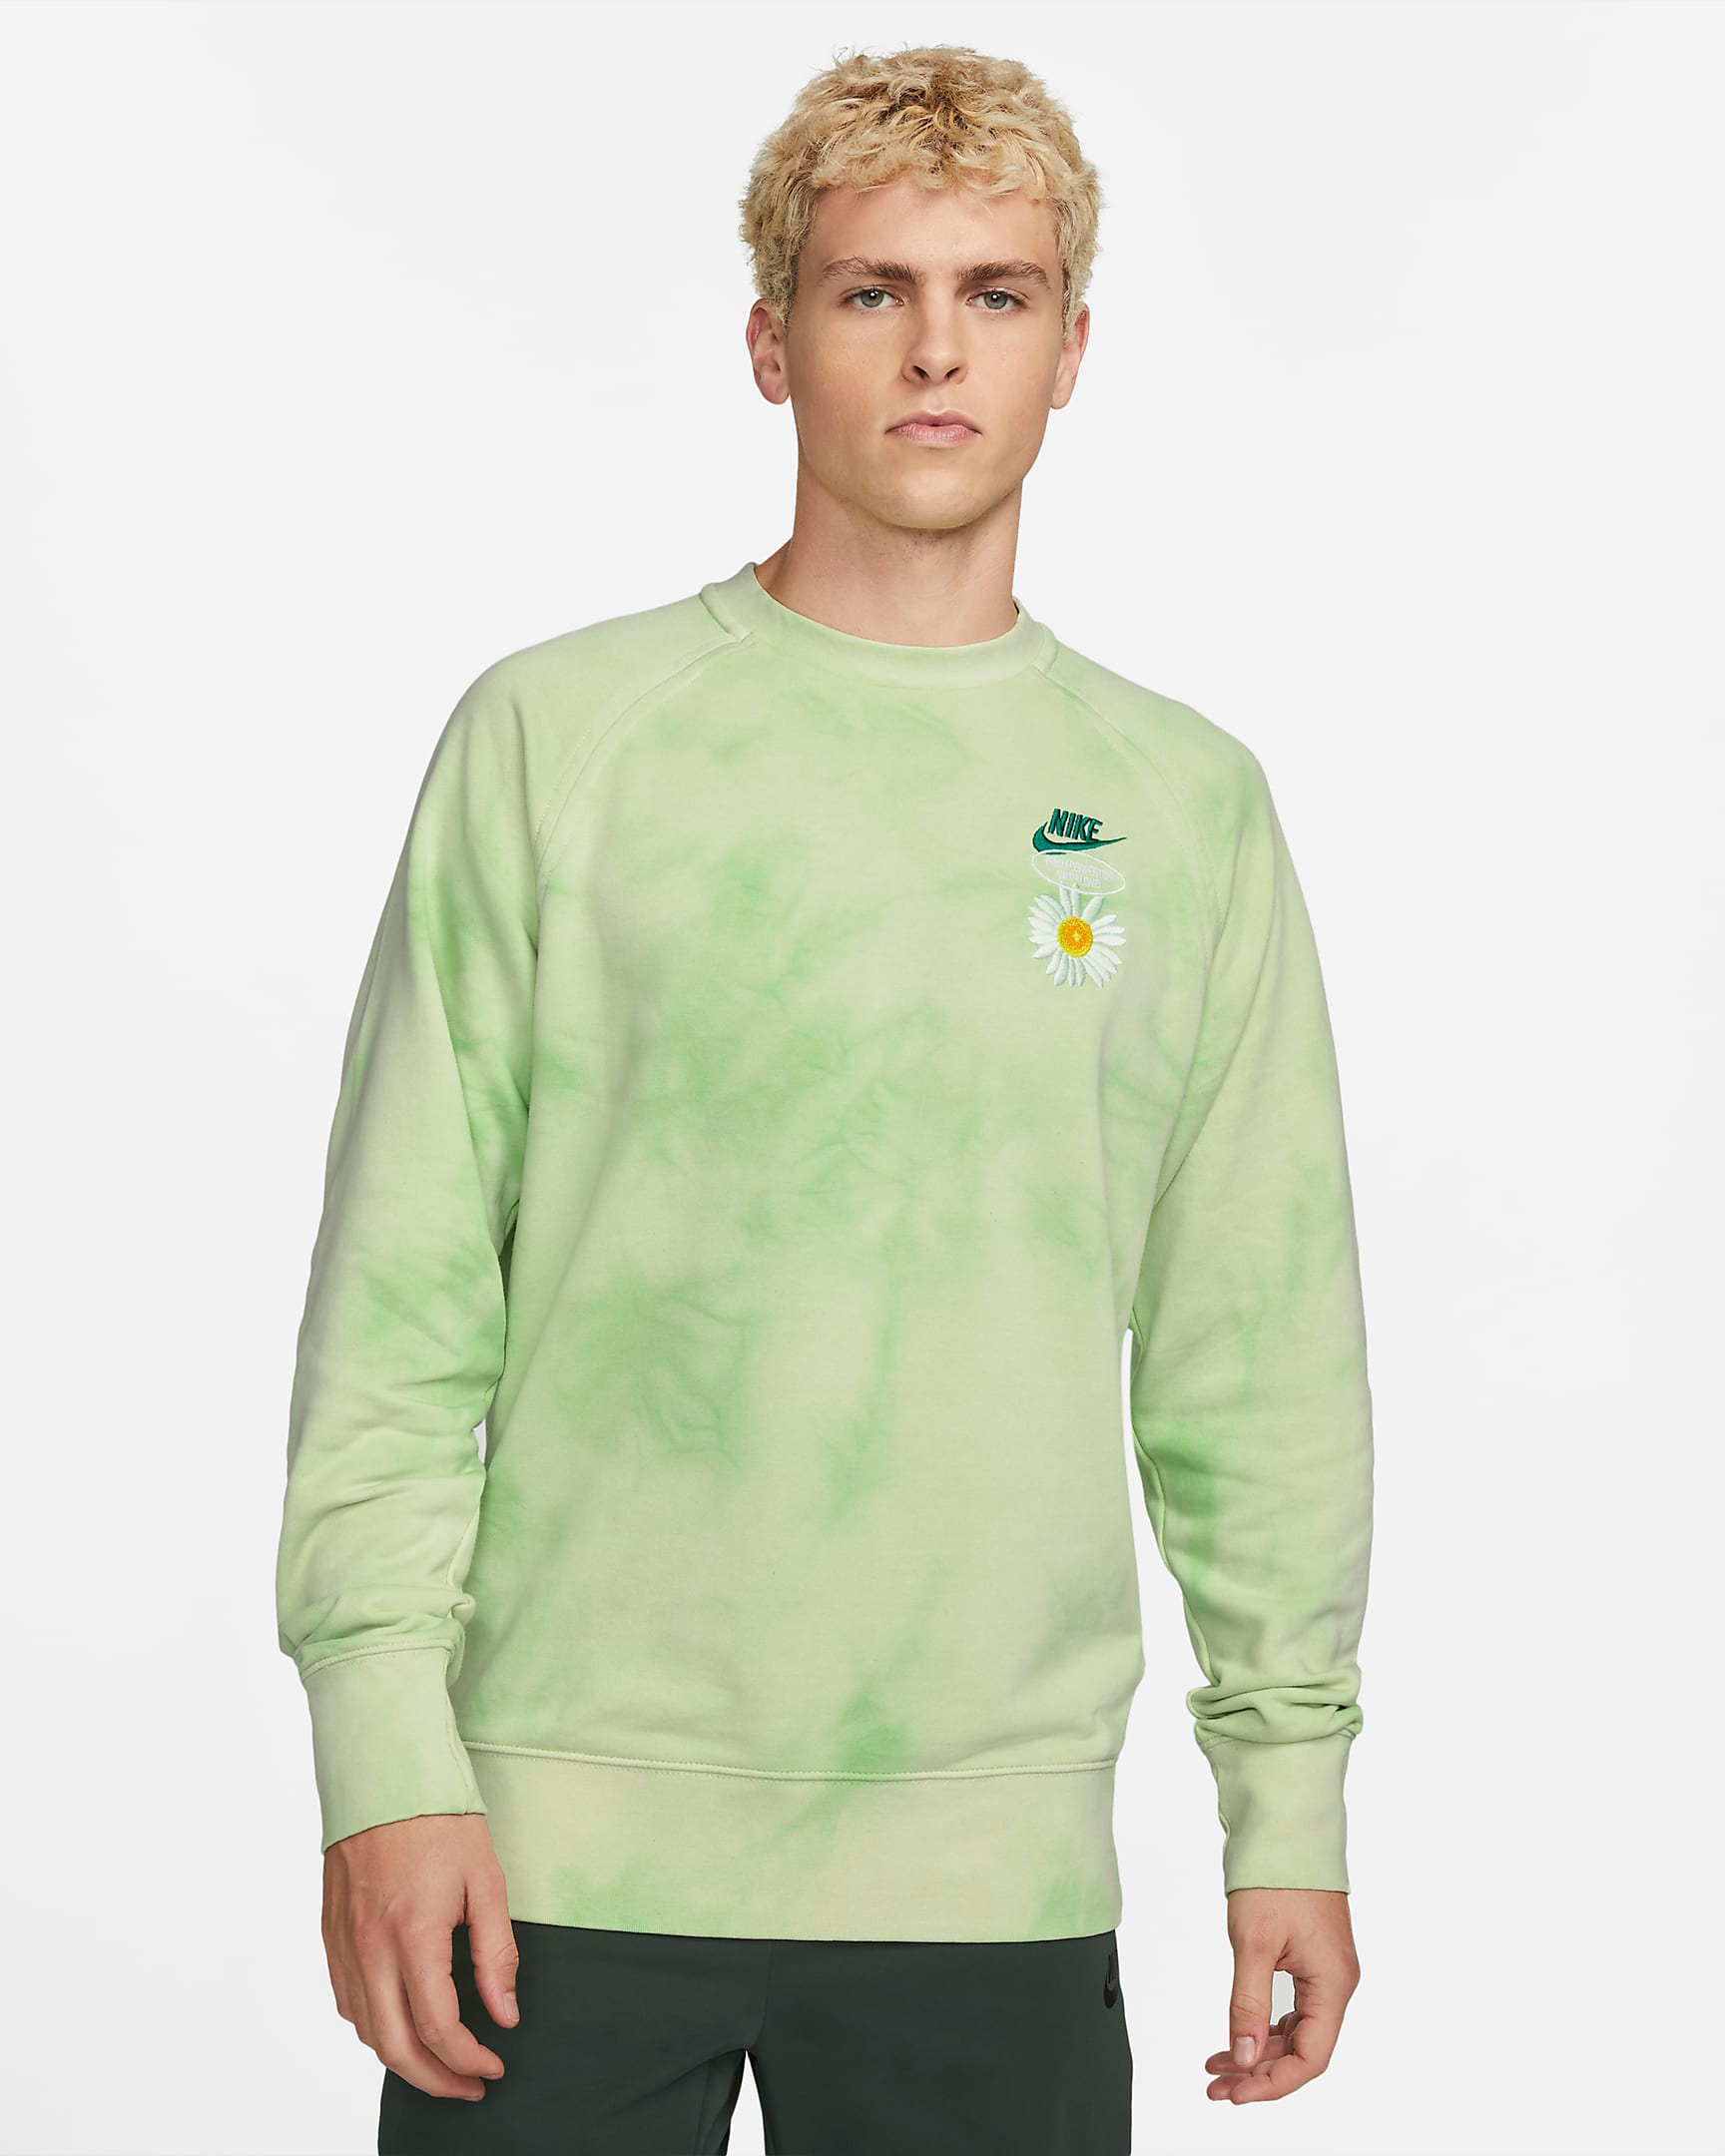 nike-vivid-green-nike-day-sweatshirt-1